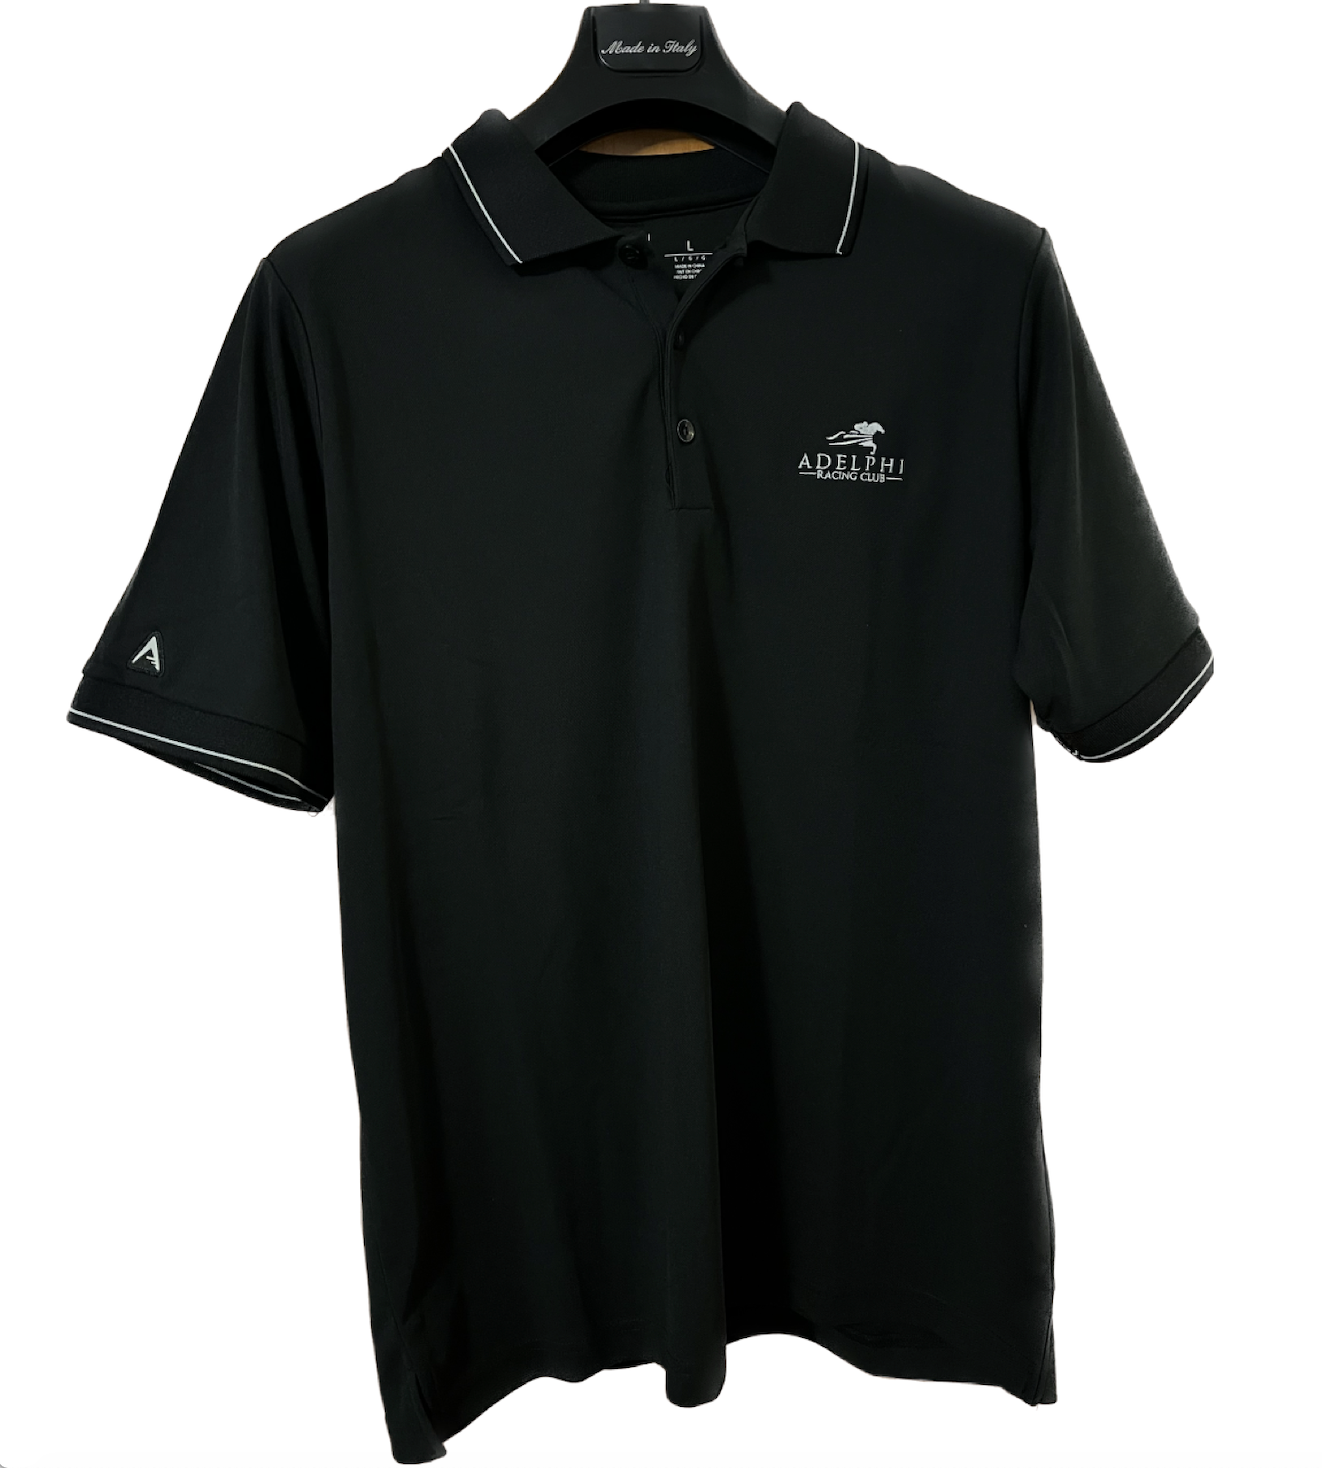 Adelphi Racing Club Polo Shirt (Free For Partners)